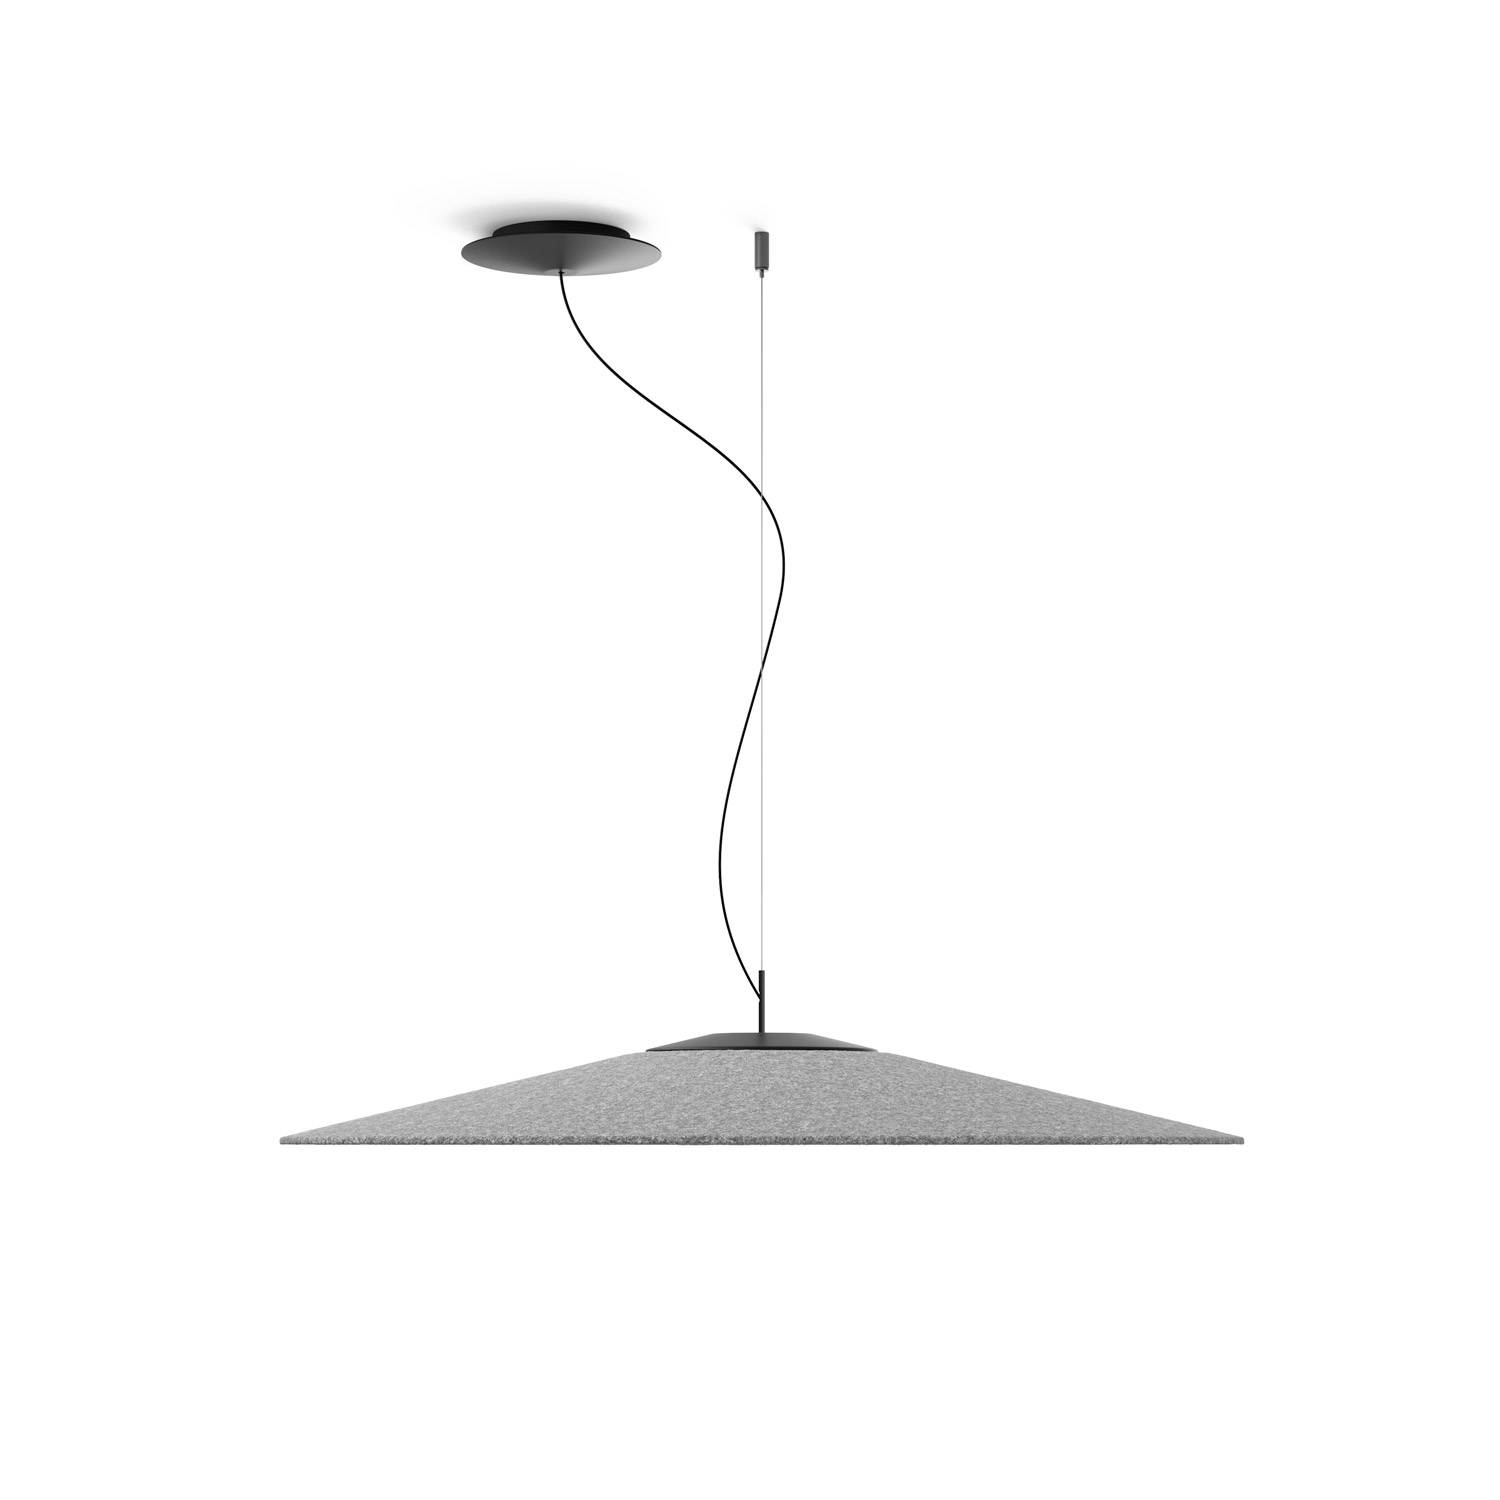 Koinè acoustic pendant lamp by Luceplan